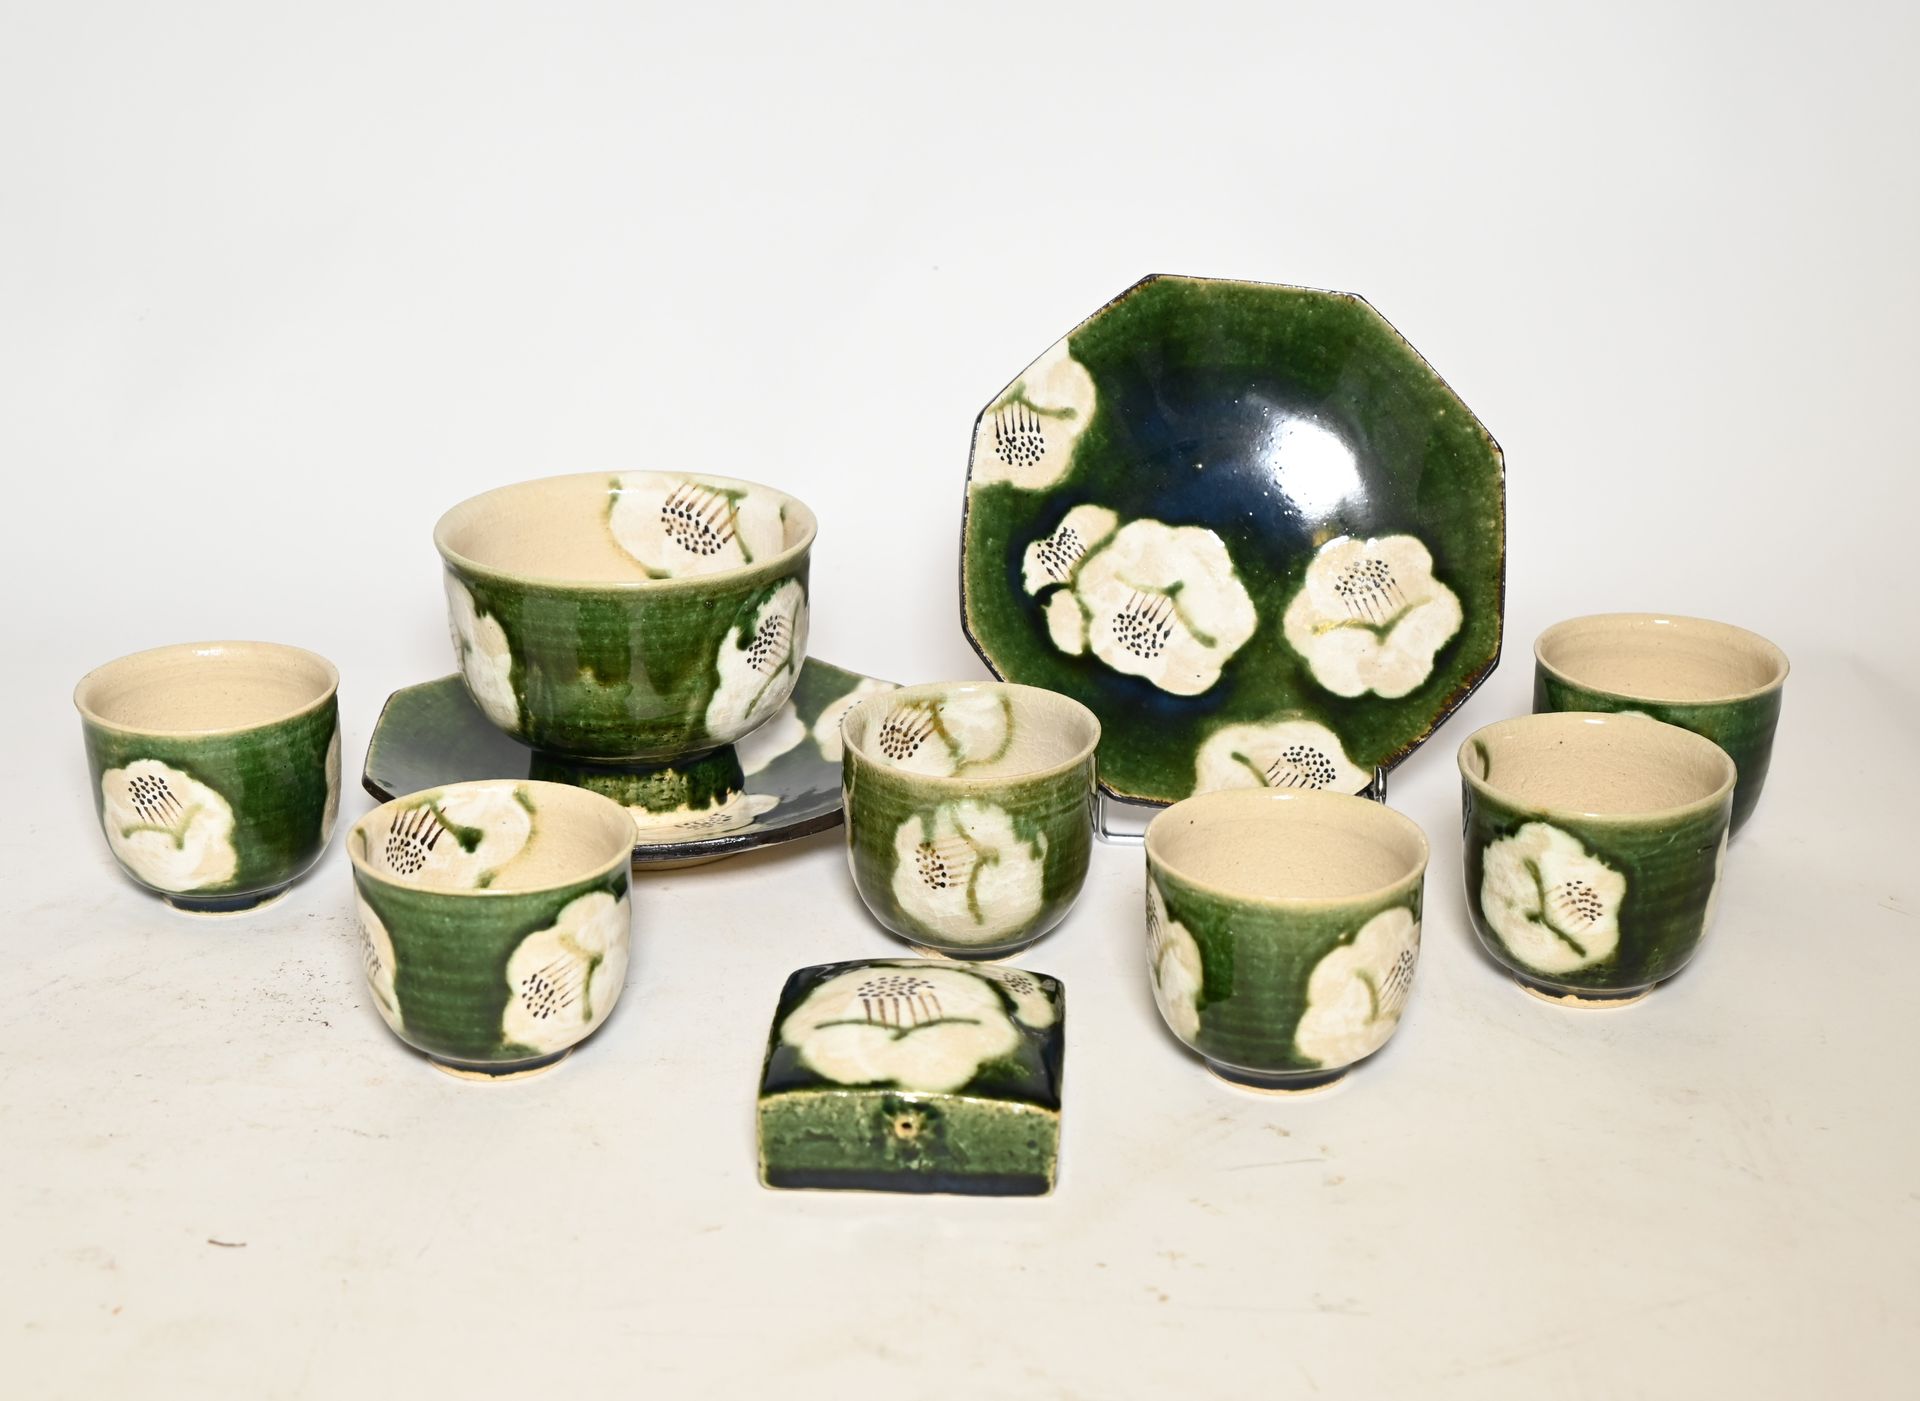 Null 一个绿色和白色的搪瓷茶水服务，包括一个碗，六个杯子，两个茶碟和一个热水瓶。标有印章。20世纪的印度支那作品。